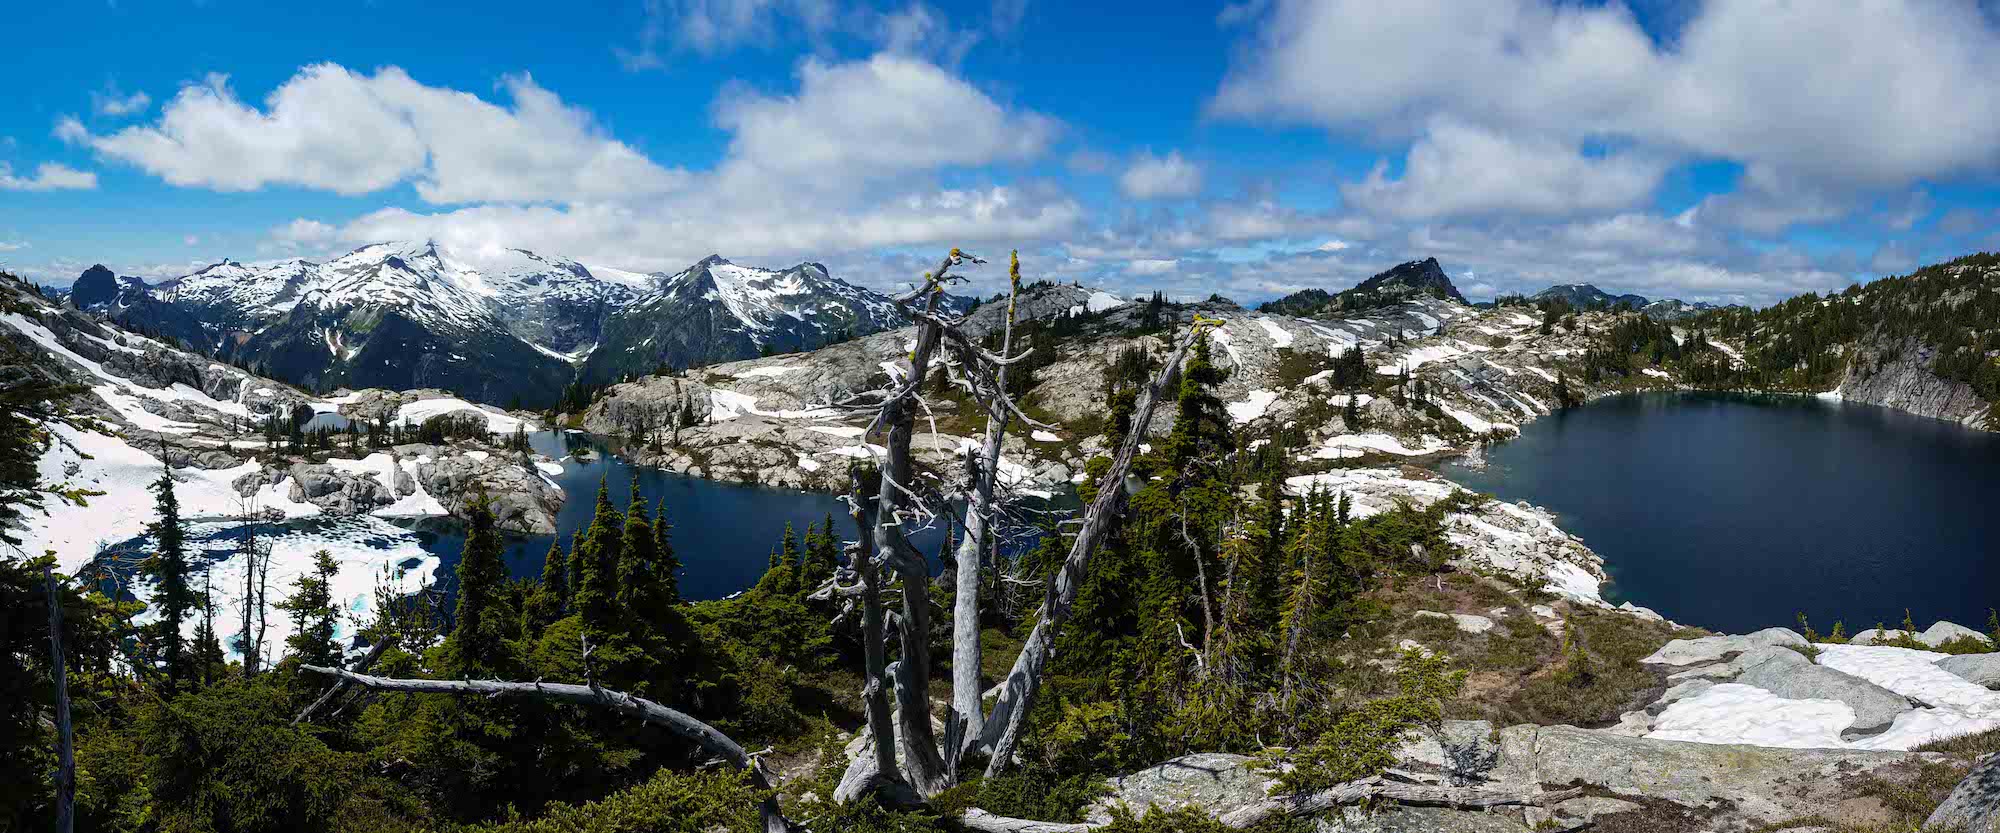 Robin Lake in Washington's Alpine Lakes Wilderness